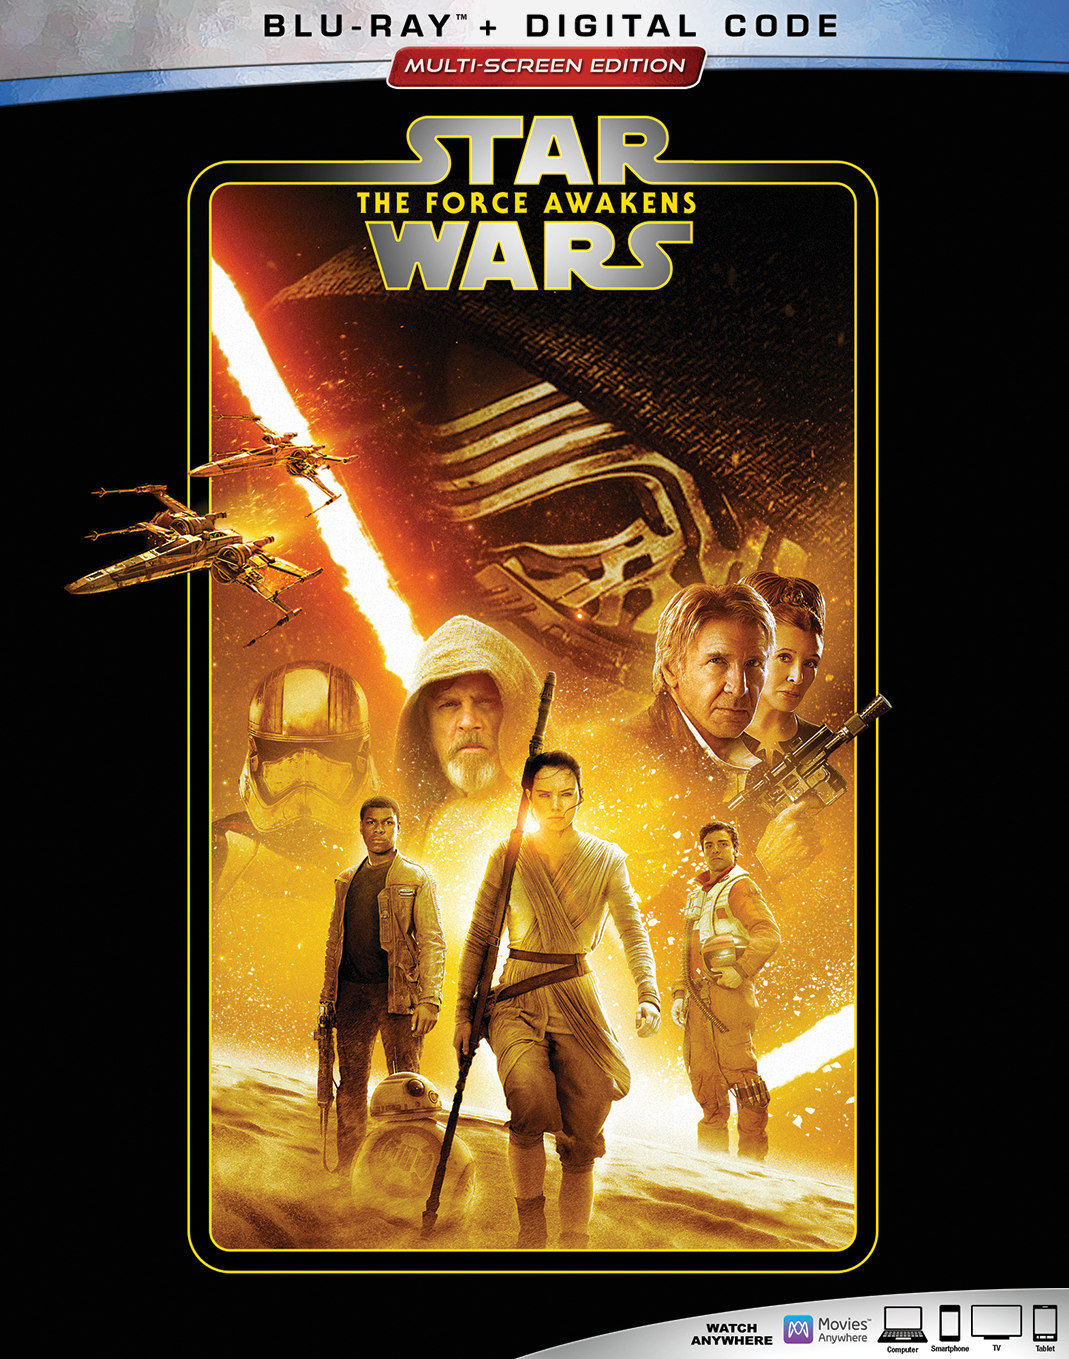 Star Wars: The Force Awakens [Includes Digital Copy] [Blu-ray] [2015]